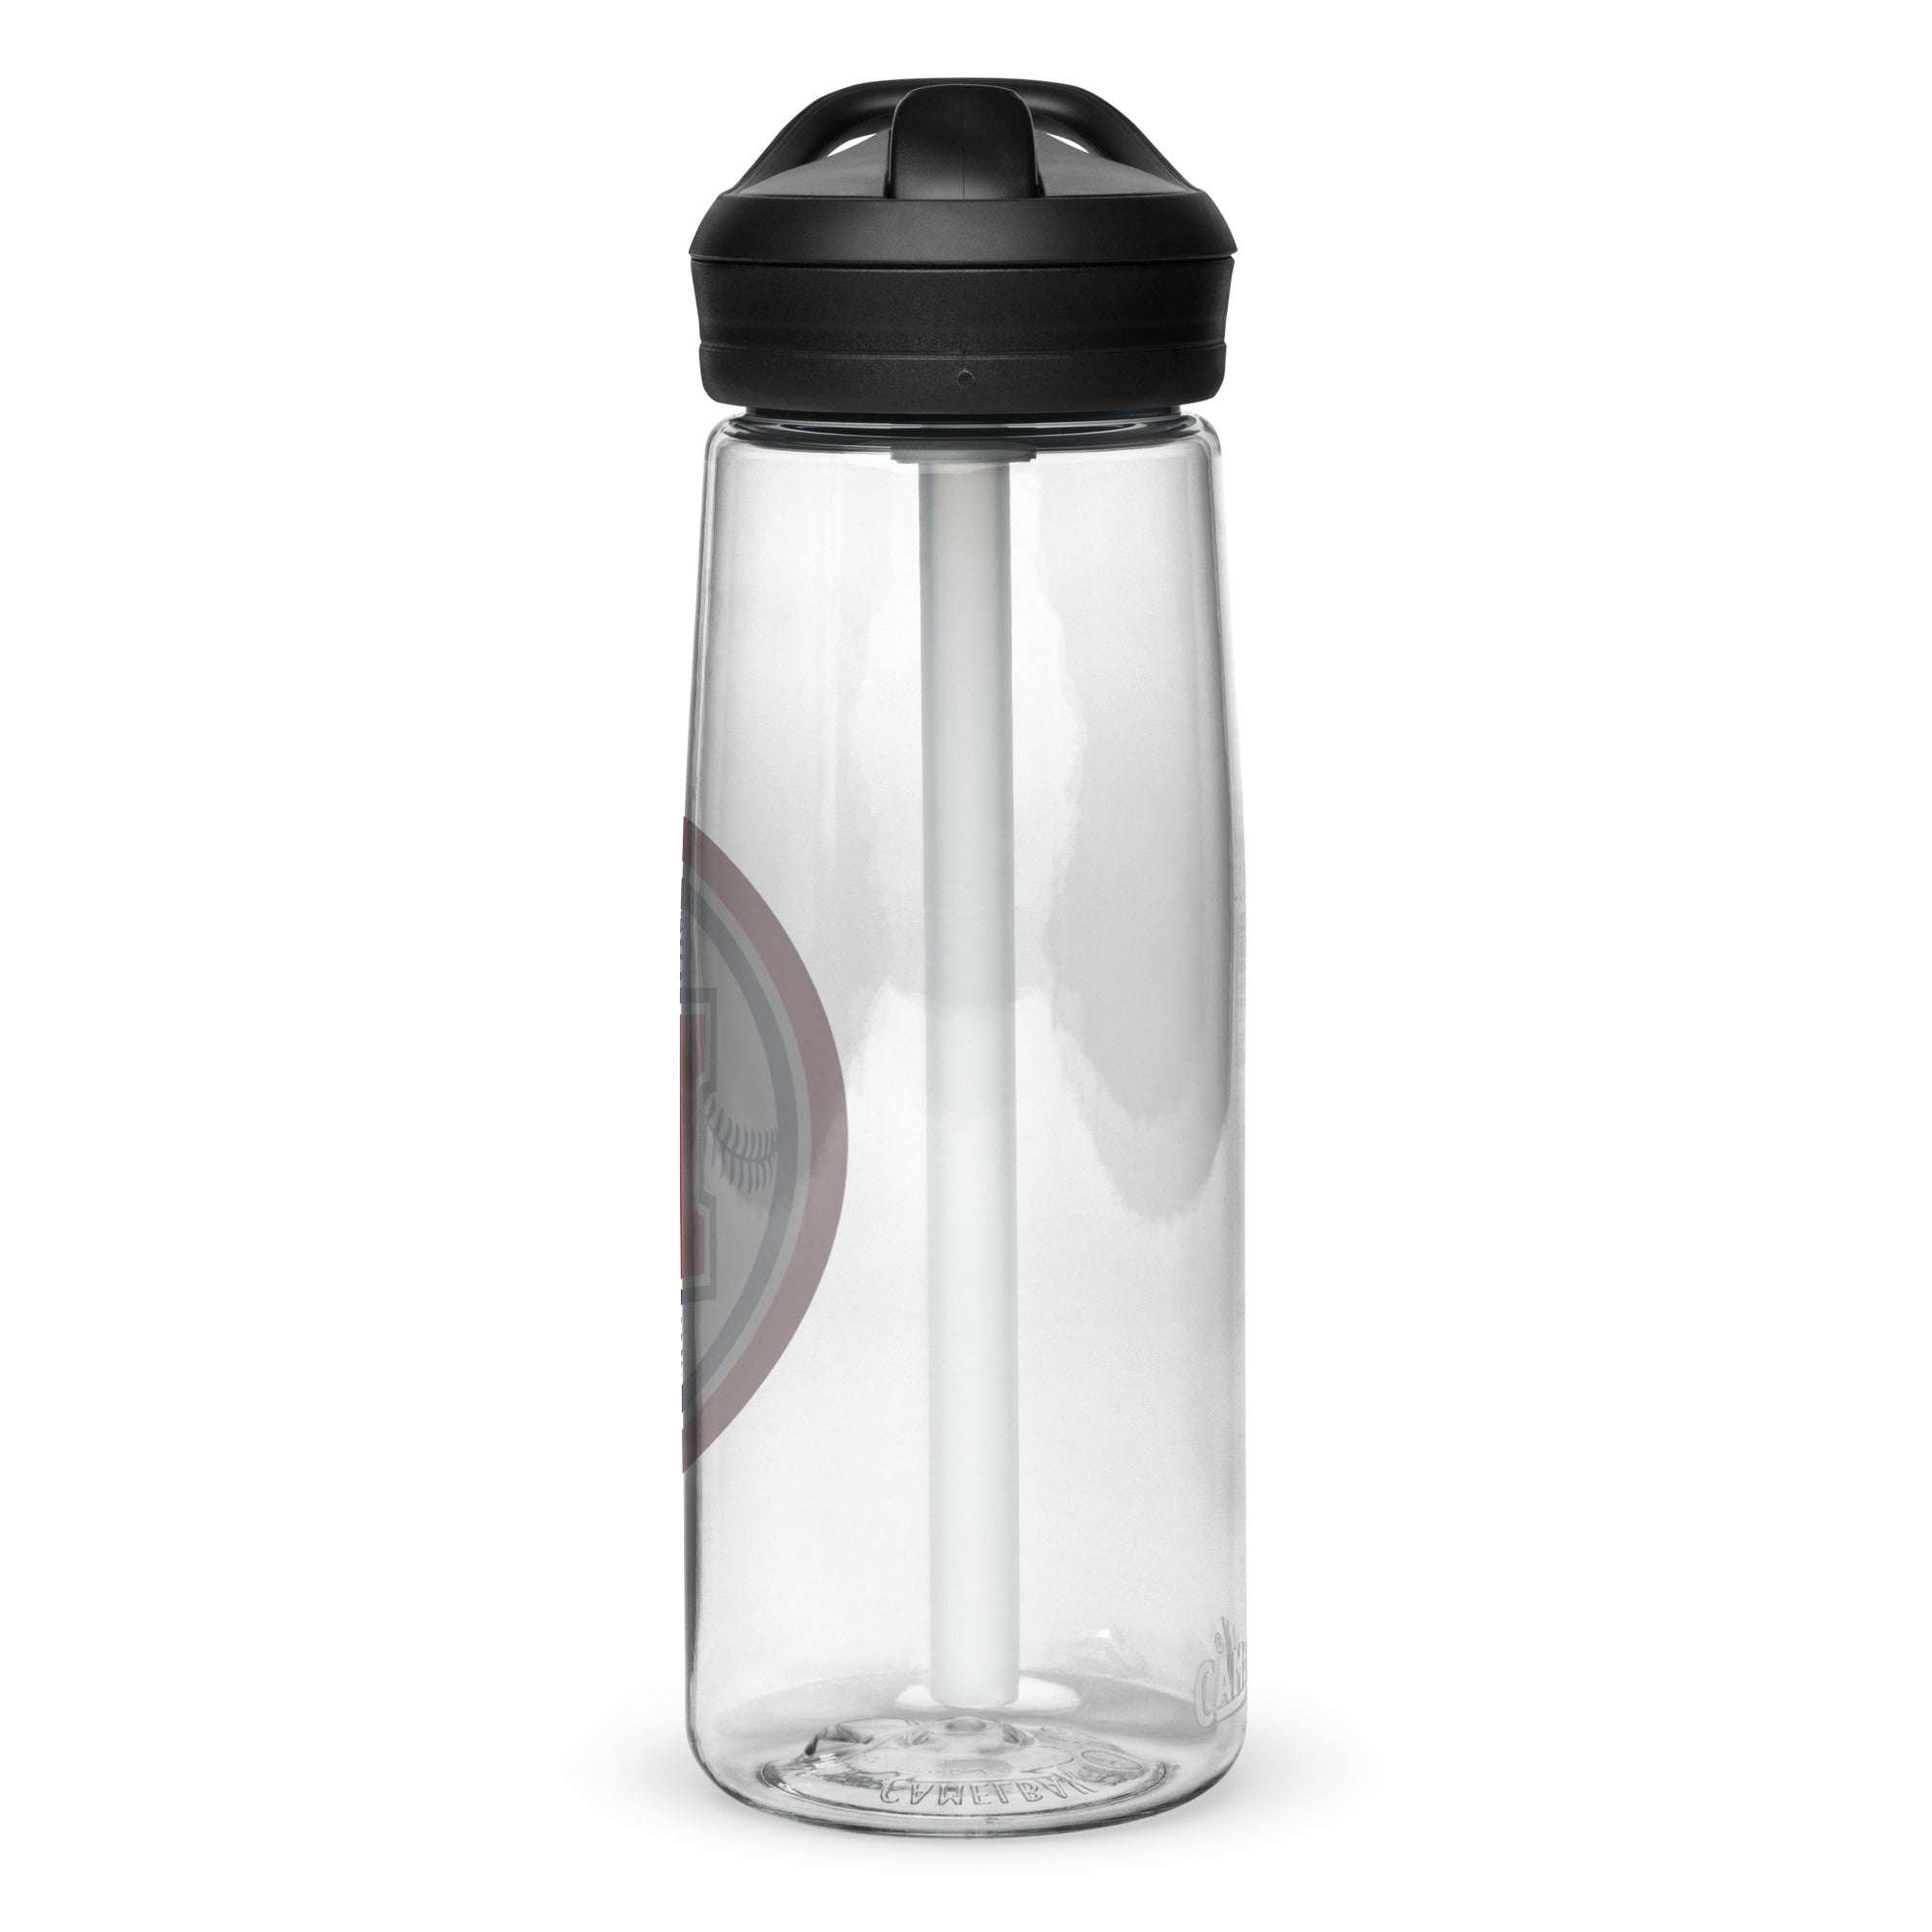 PAB Sports water bottle